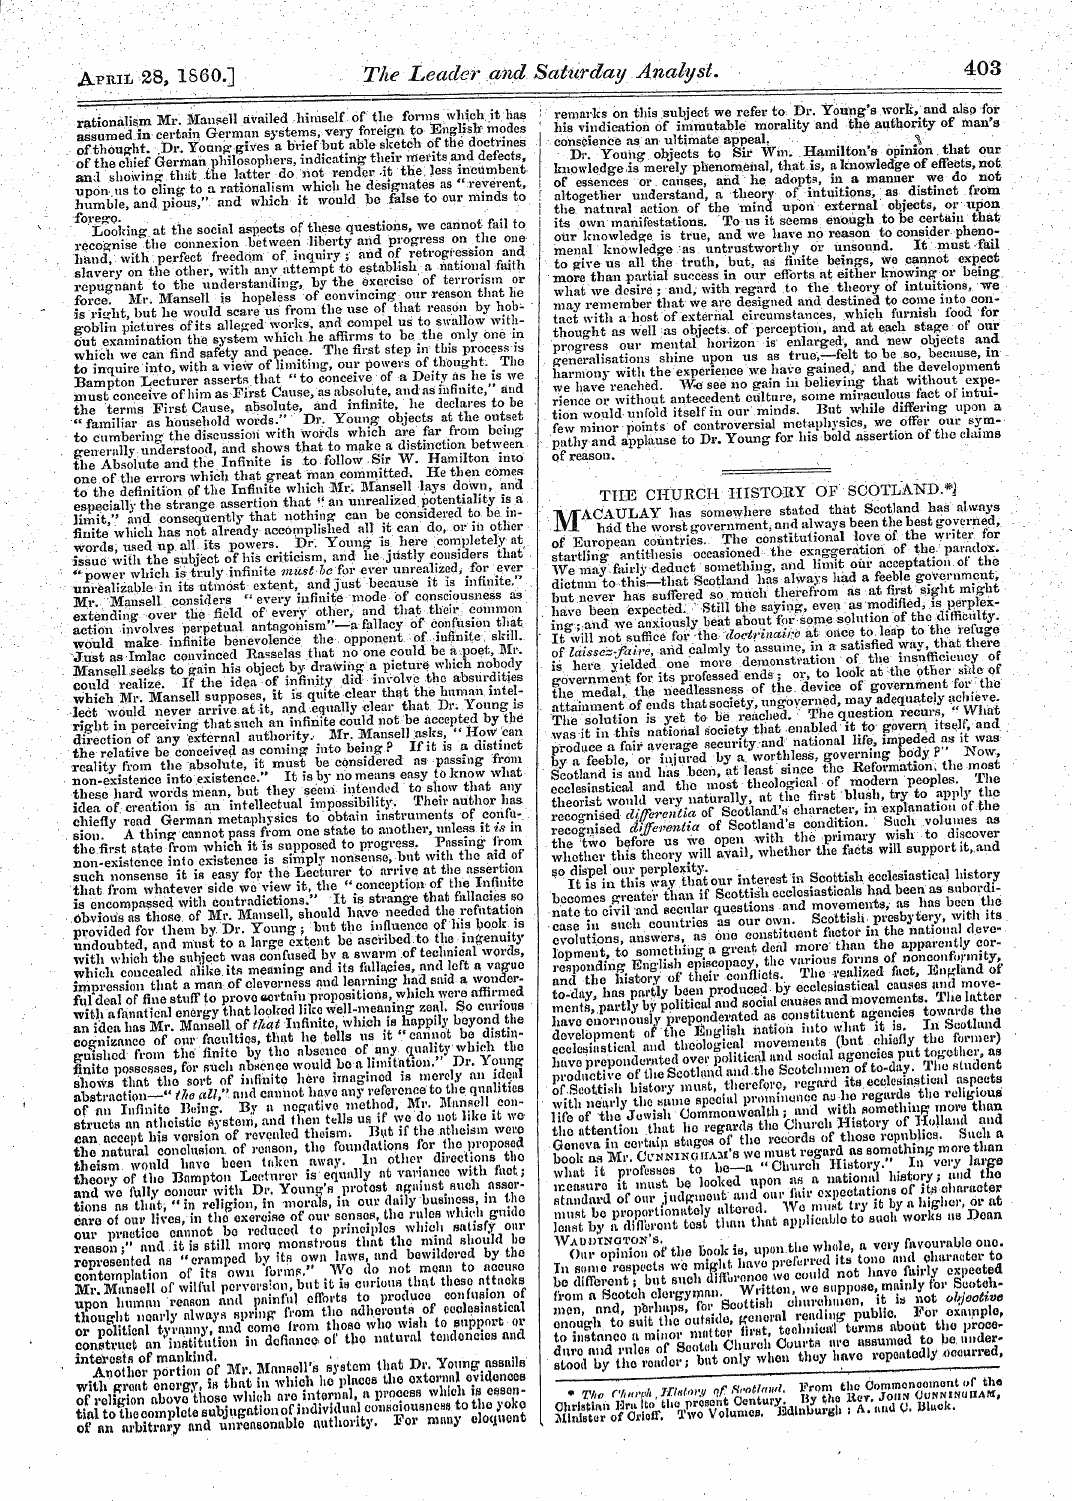 Leader (1850-1860): jS F Y, 2nd edition - The Pjlovlnclj: Of Reason. * Fe W Works ...